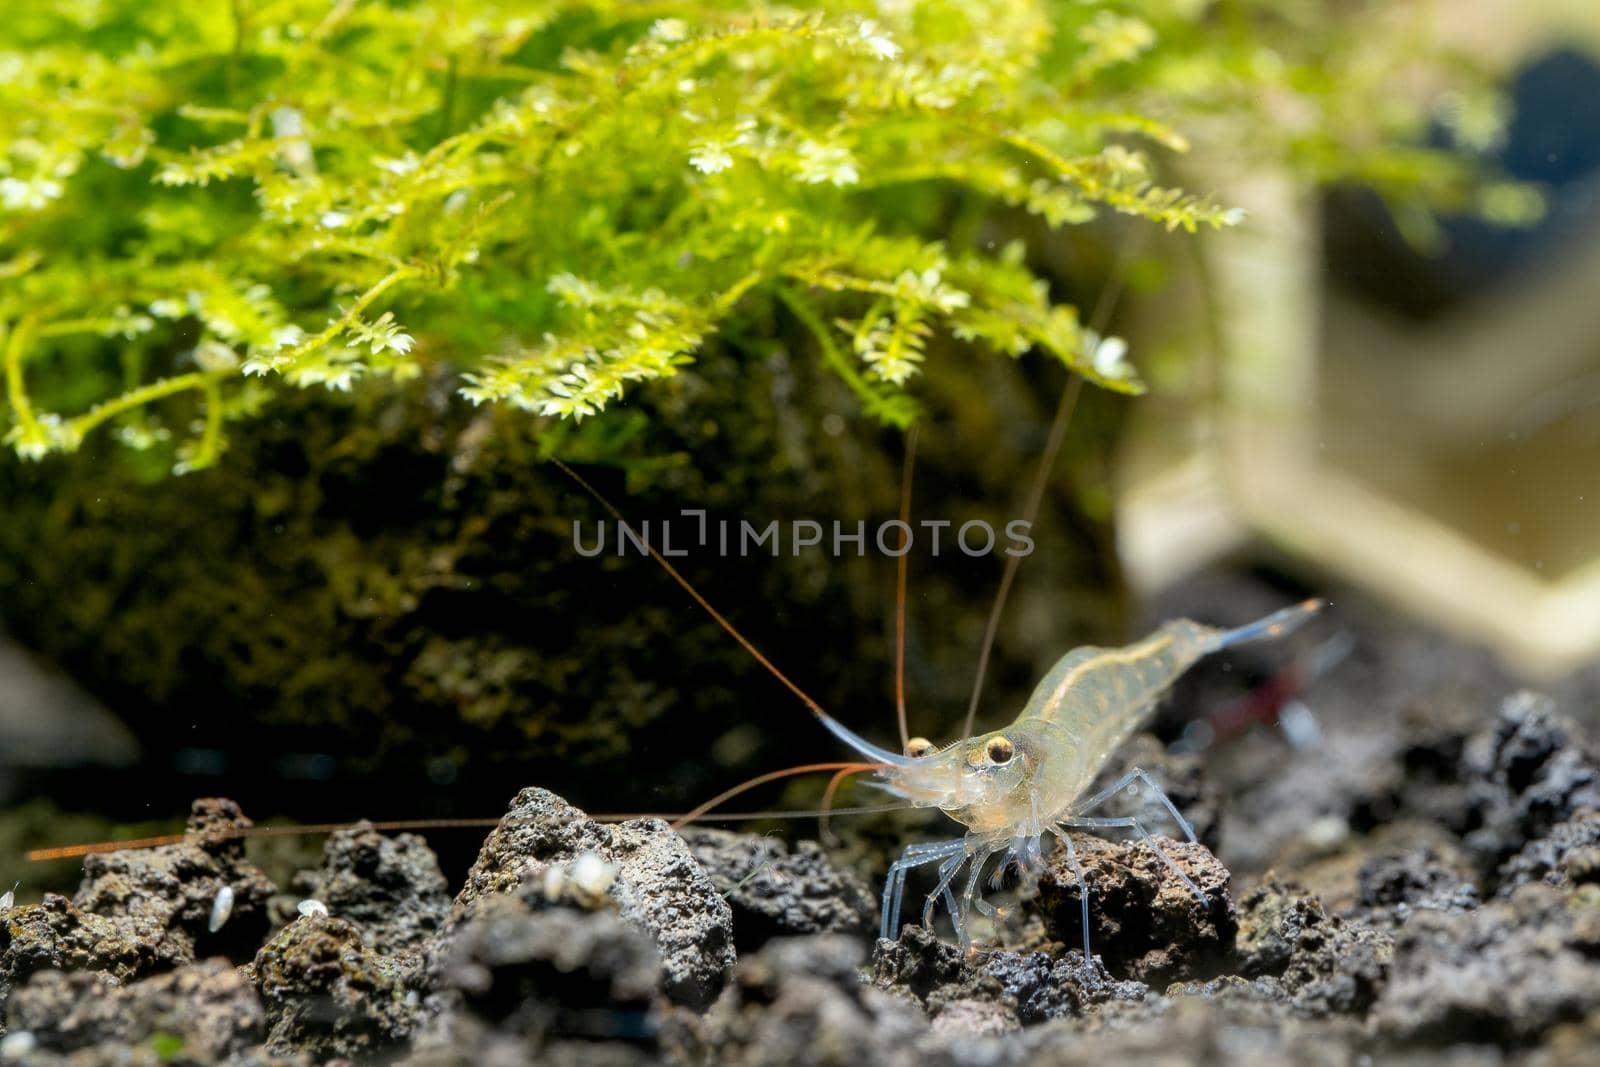 Close up Sulawesi Blue Leg Poso shrimp look for food near moss in lava stone of fresh water aquarium tank.